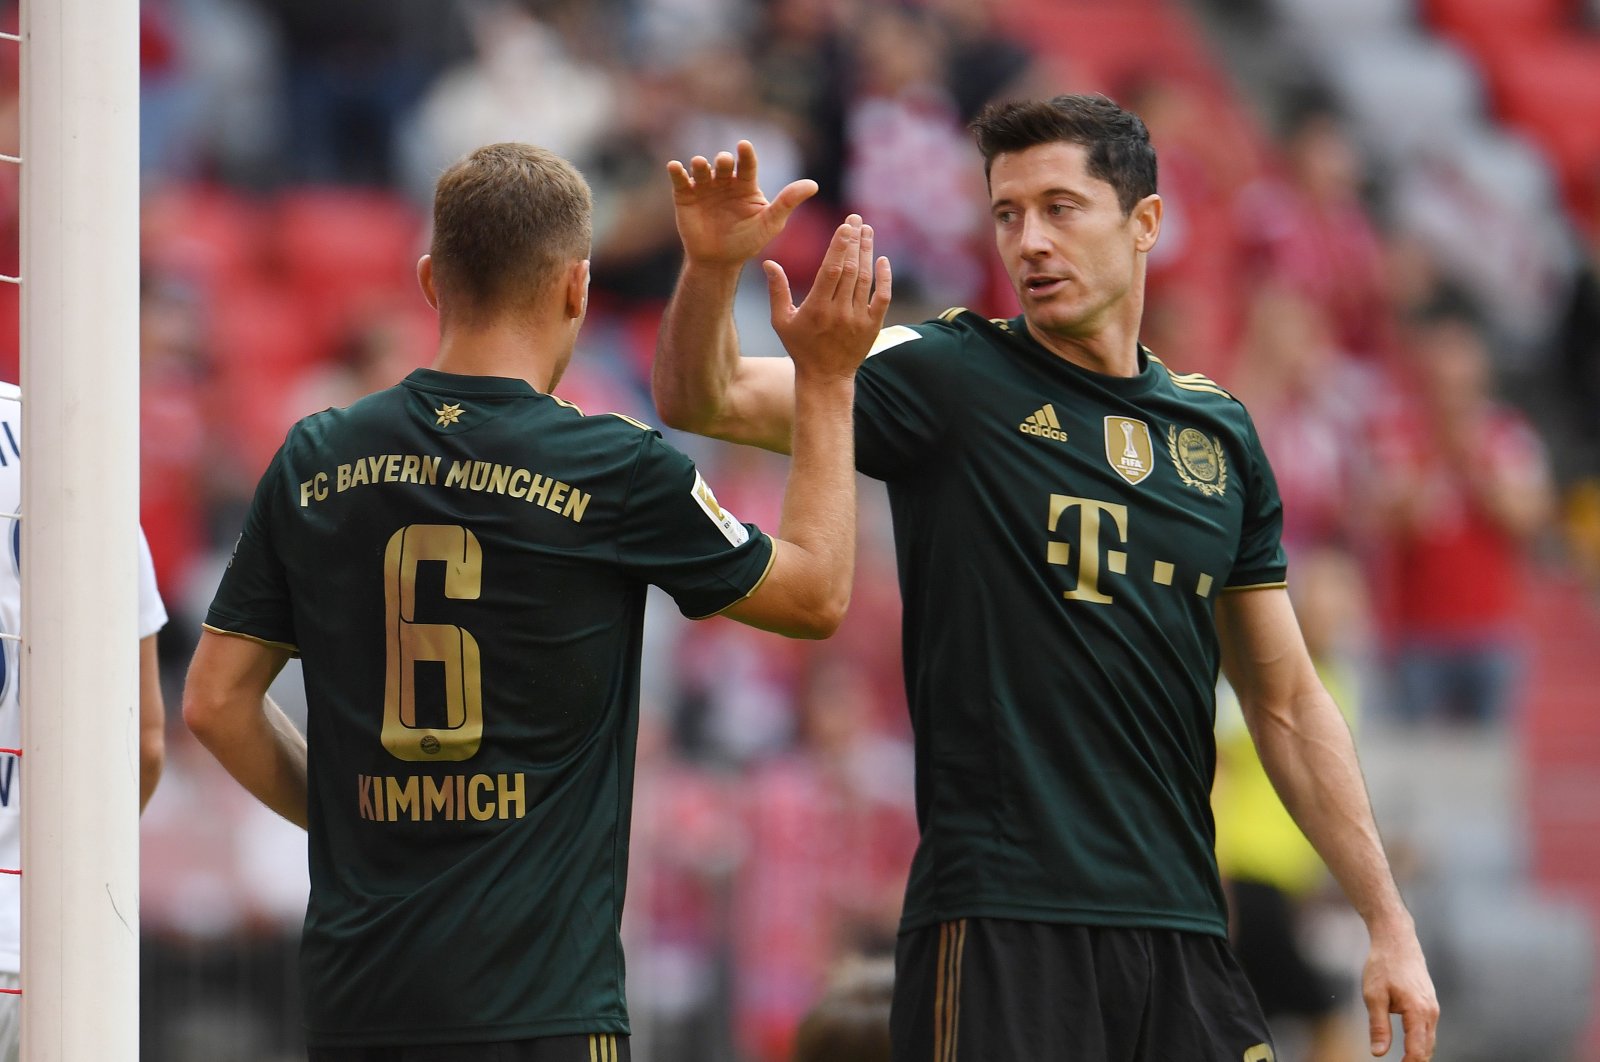 Bayern Munich's Joshua Kimmich celebrates scoring their sixth goal with Robert Lewandowski, Munich, Sept. 18, 2021. (Reuters Photo)